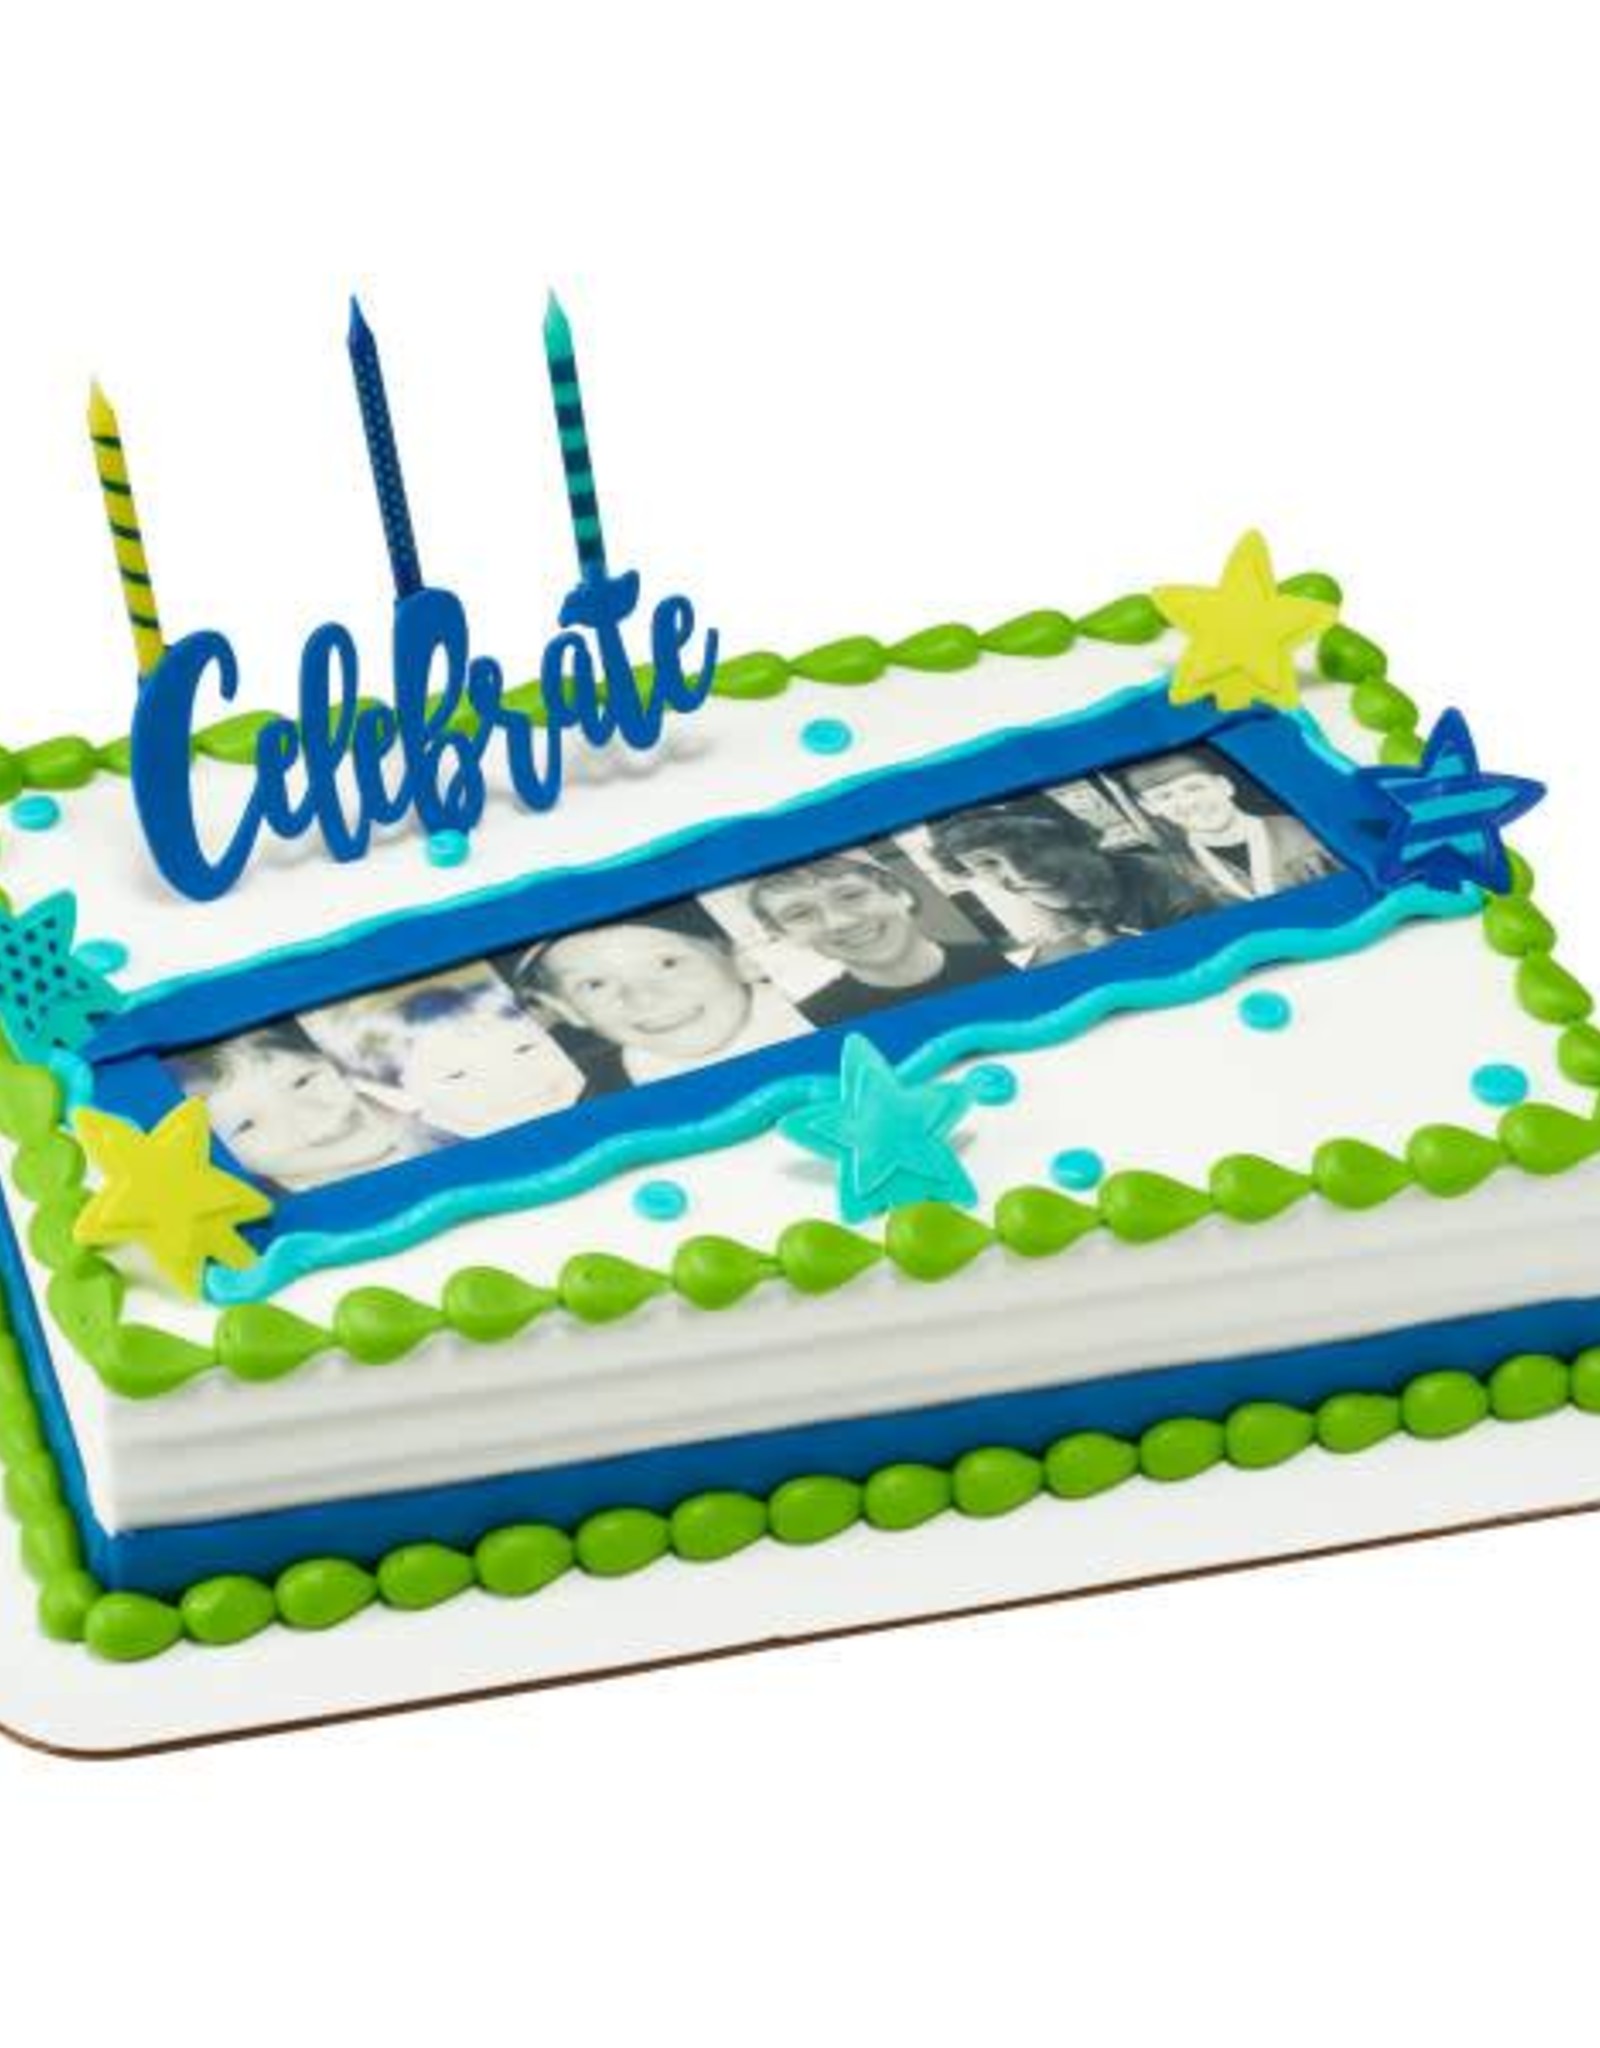 Celebrate Candle Holder Cake Topper